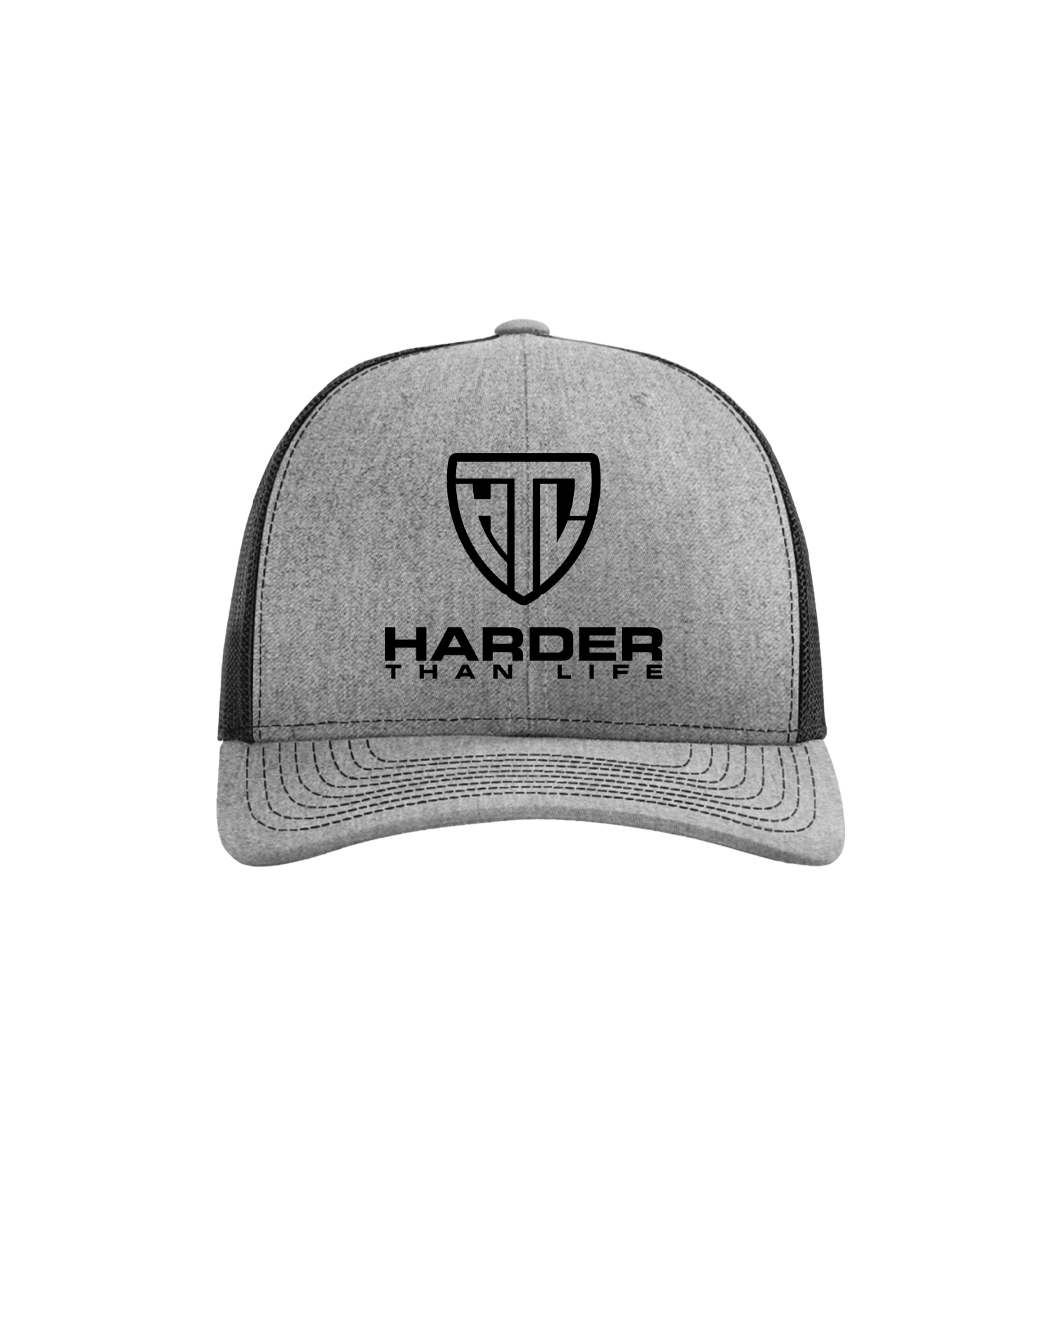 Harder hat